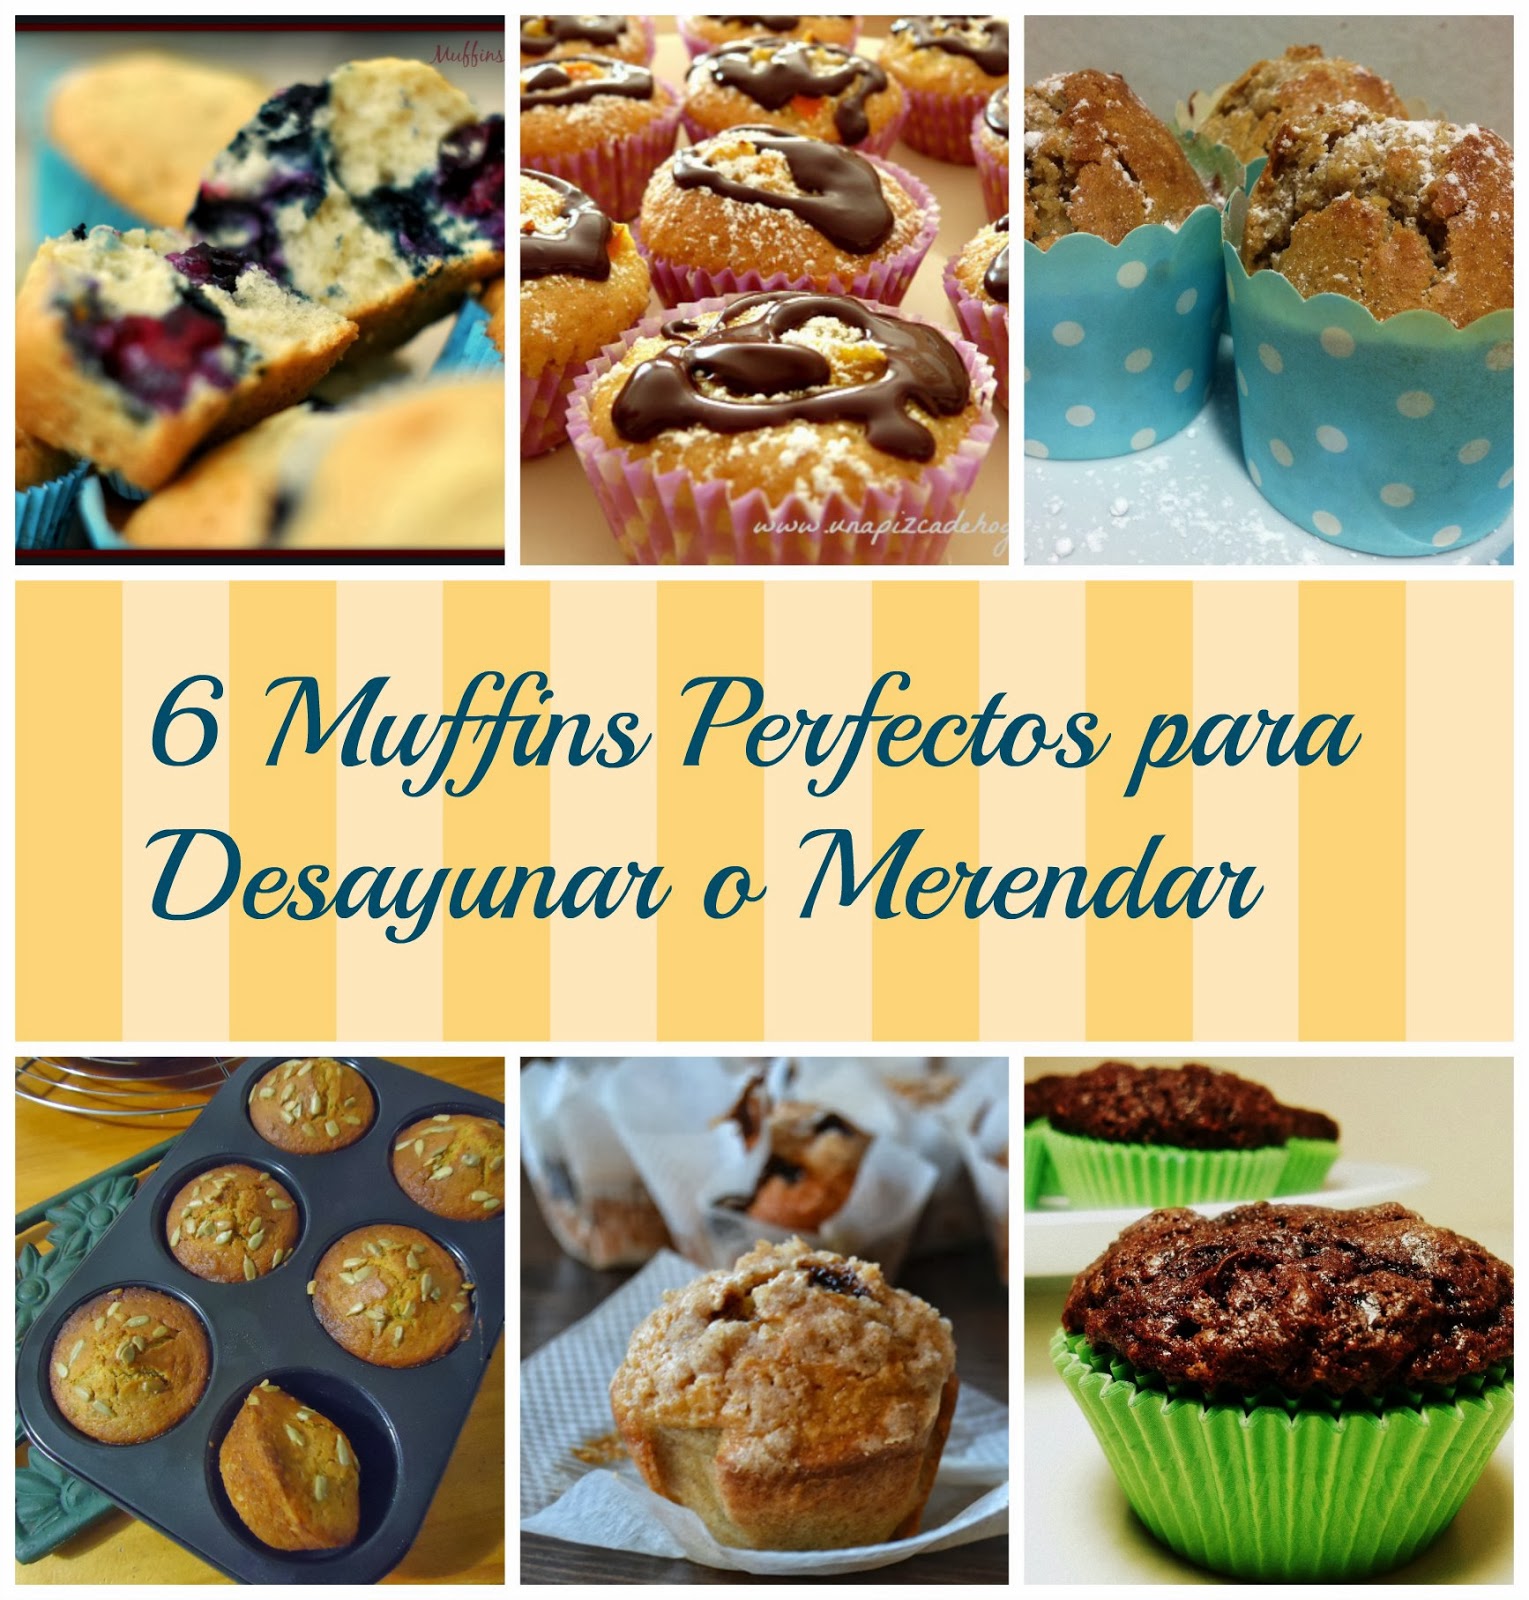 6 Recetas Muffins para Desayunar o Merendar